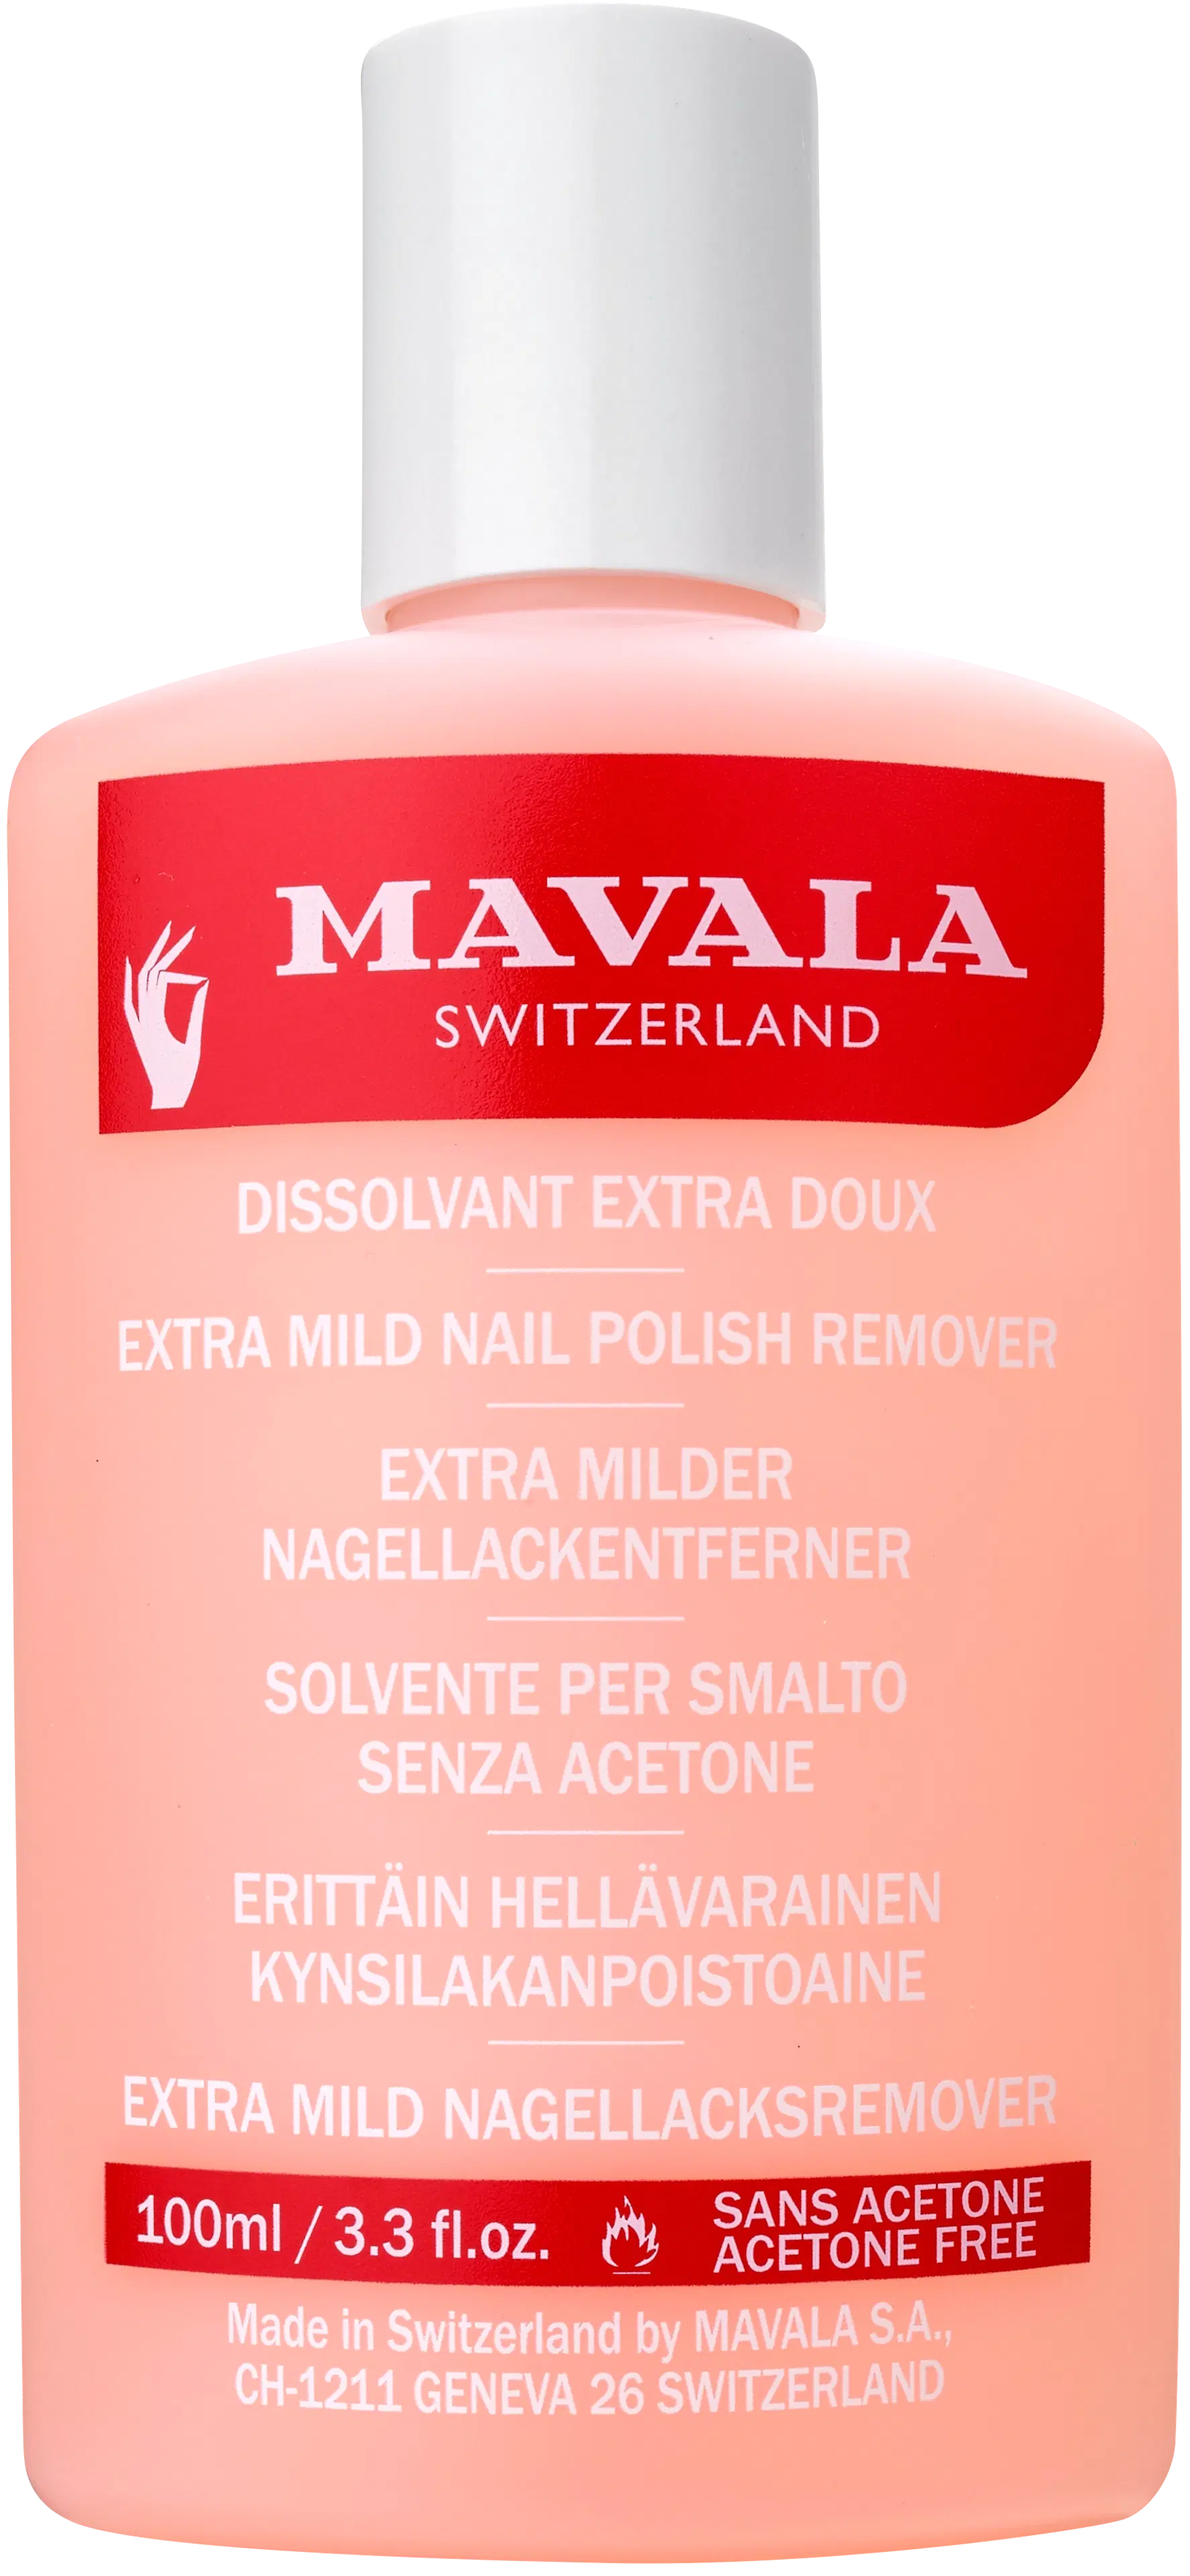 Mavala 100ml Nail Polish Remower Pink kynsilakanpoistoaine pinkki